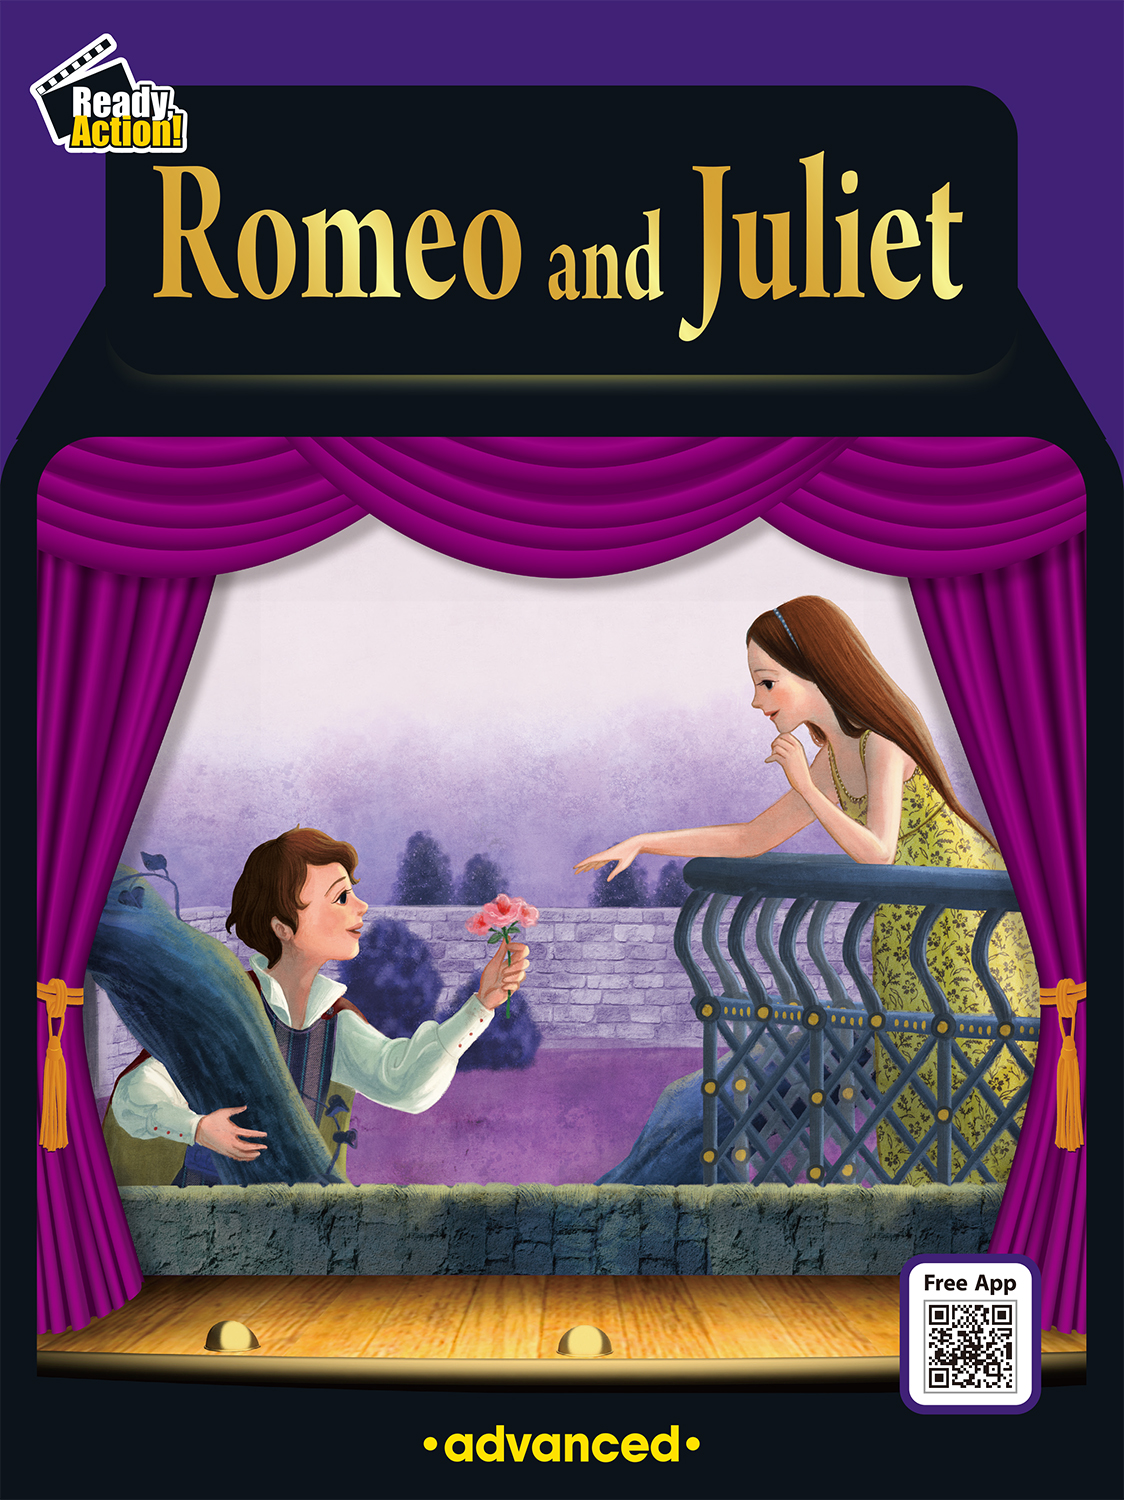 Pack-RA Advanced (2020) : Romeo and Juliet